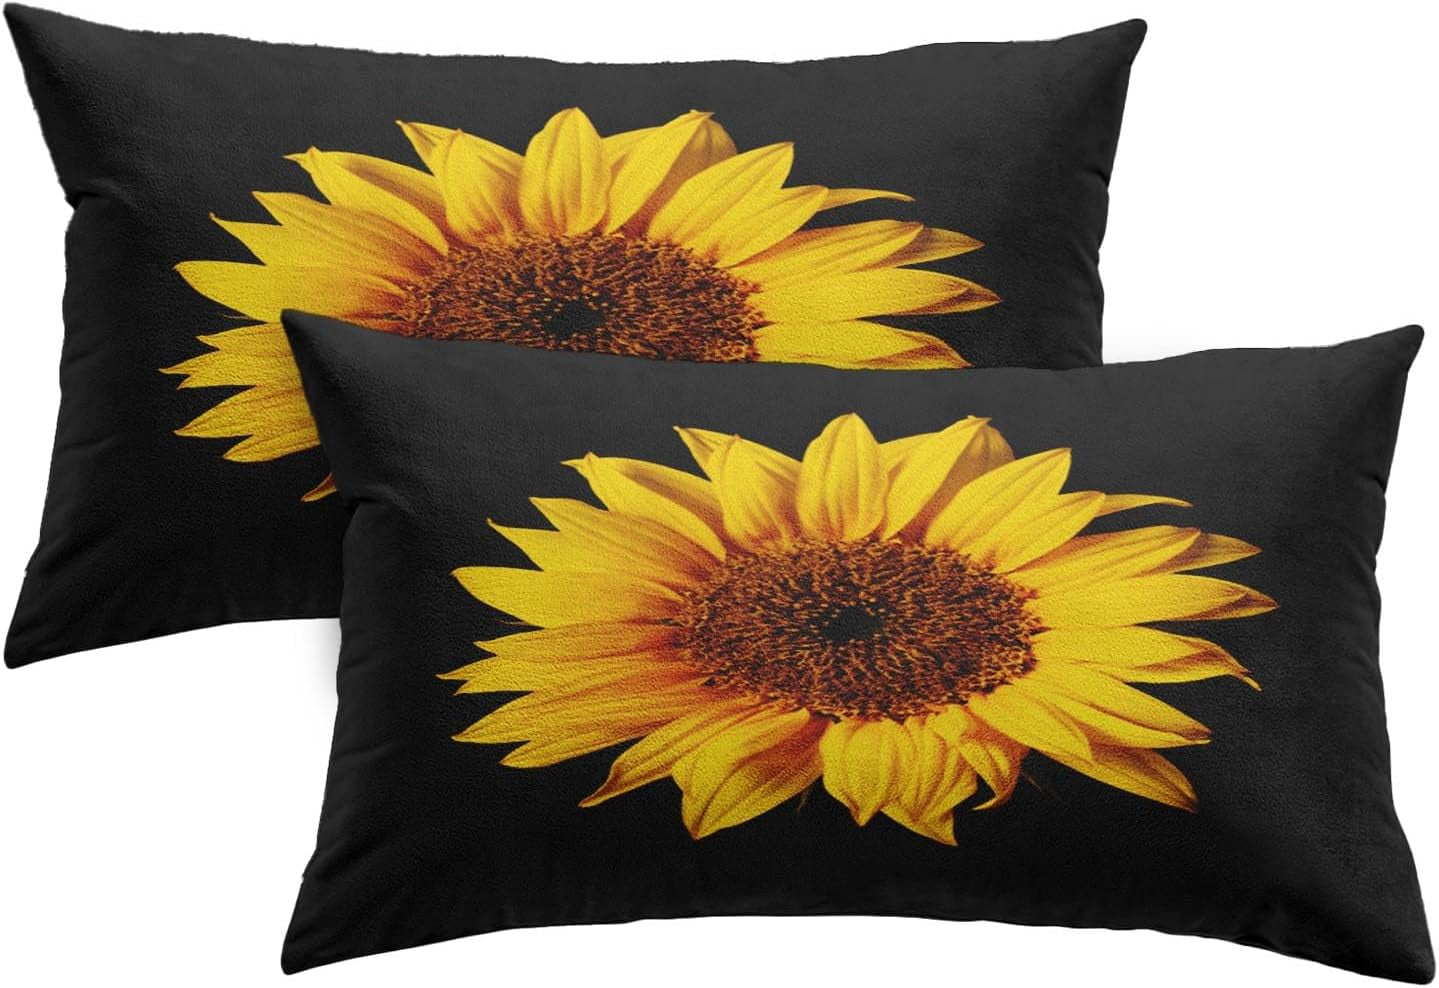 Emvency Set of 2 Sunflower Throw Pillow Covers Yellow Black Sun Flowers Decor Pillowcases Polyester 18 X 18 Inch Square Hidden Zipper Home Cushion Decorative Pillowcase